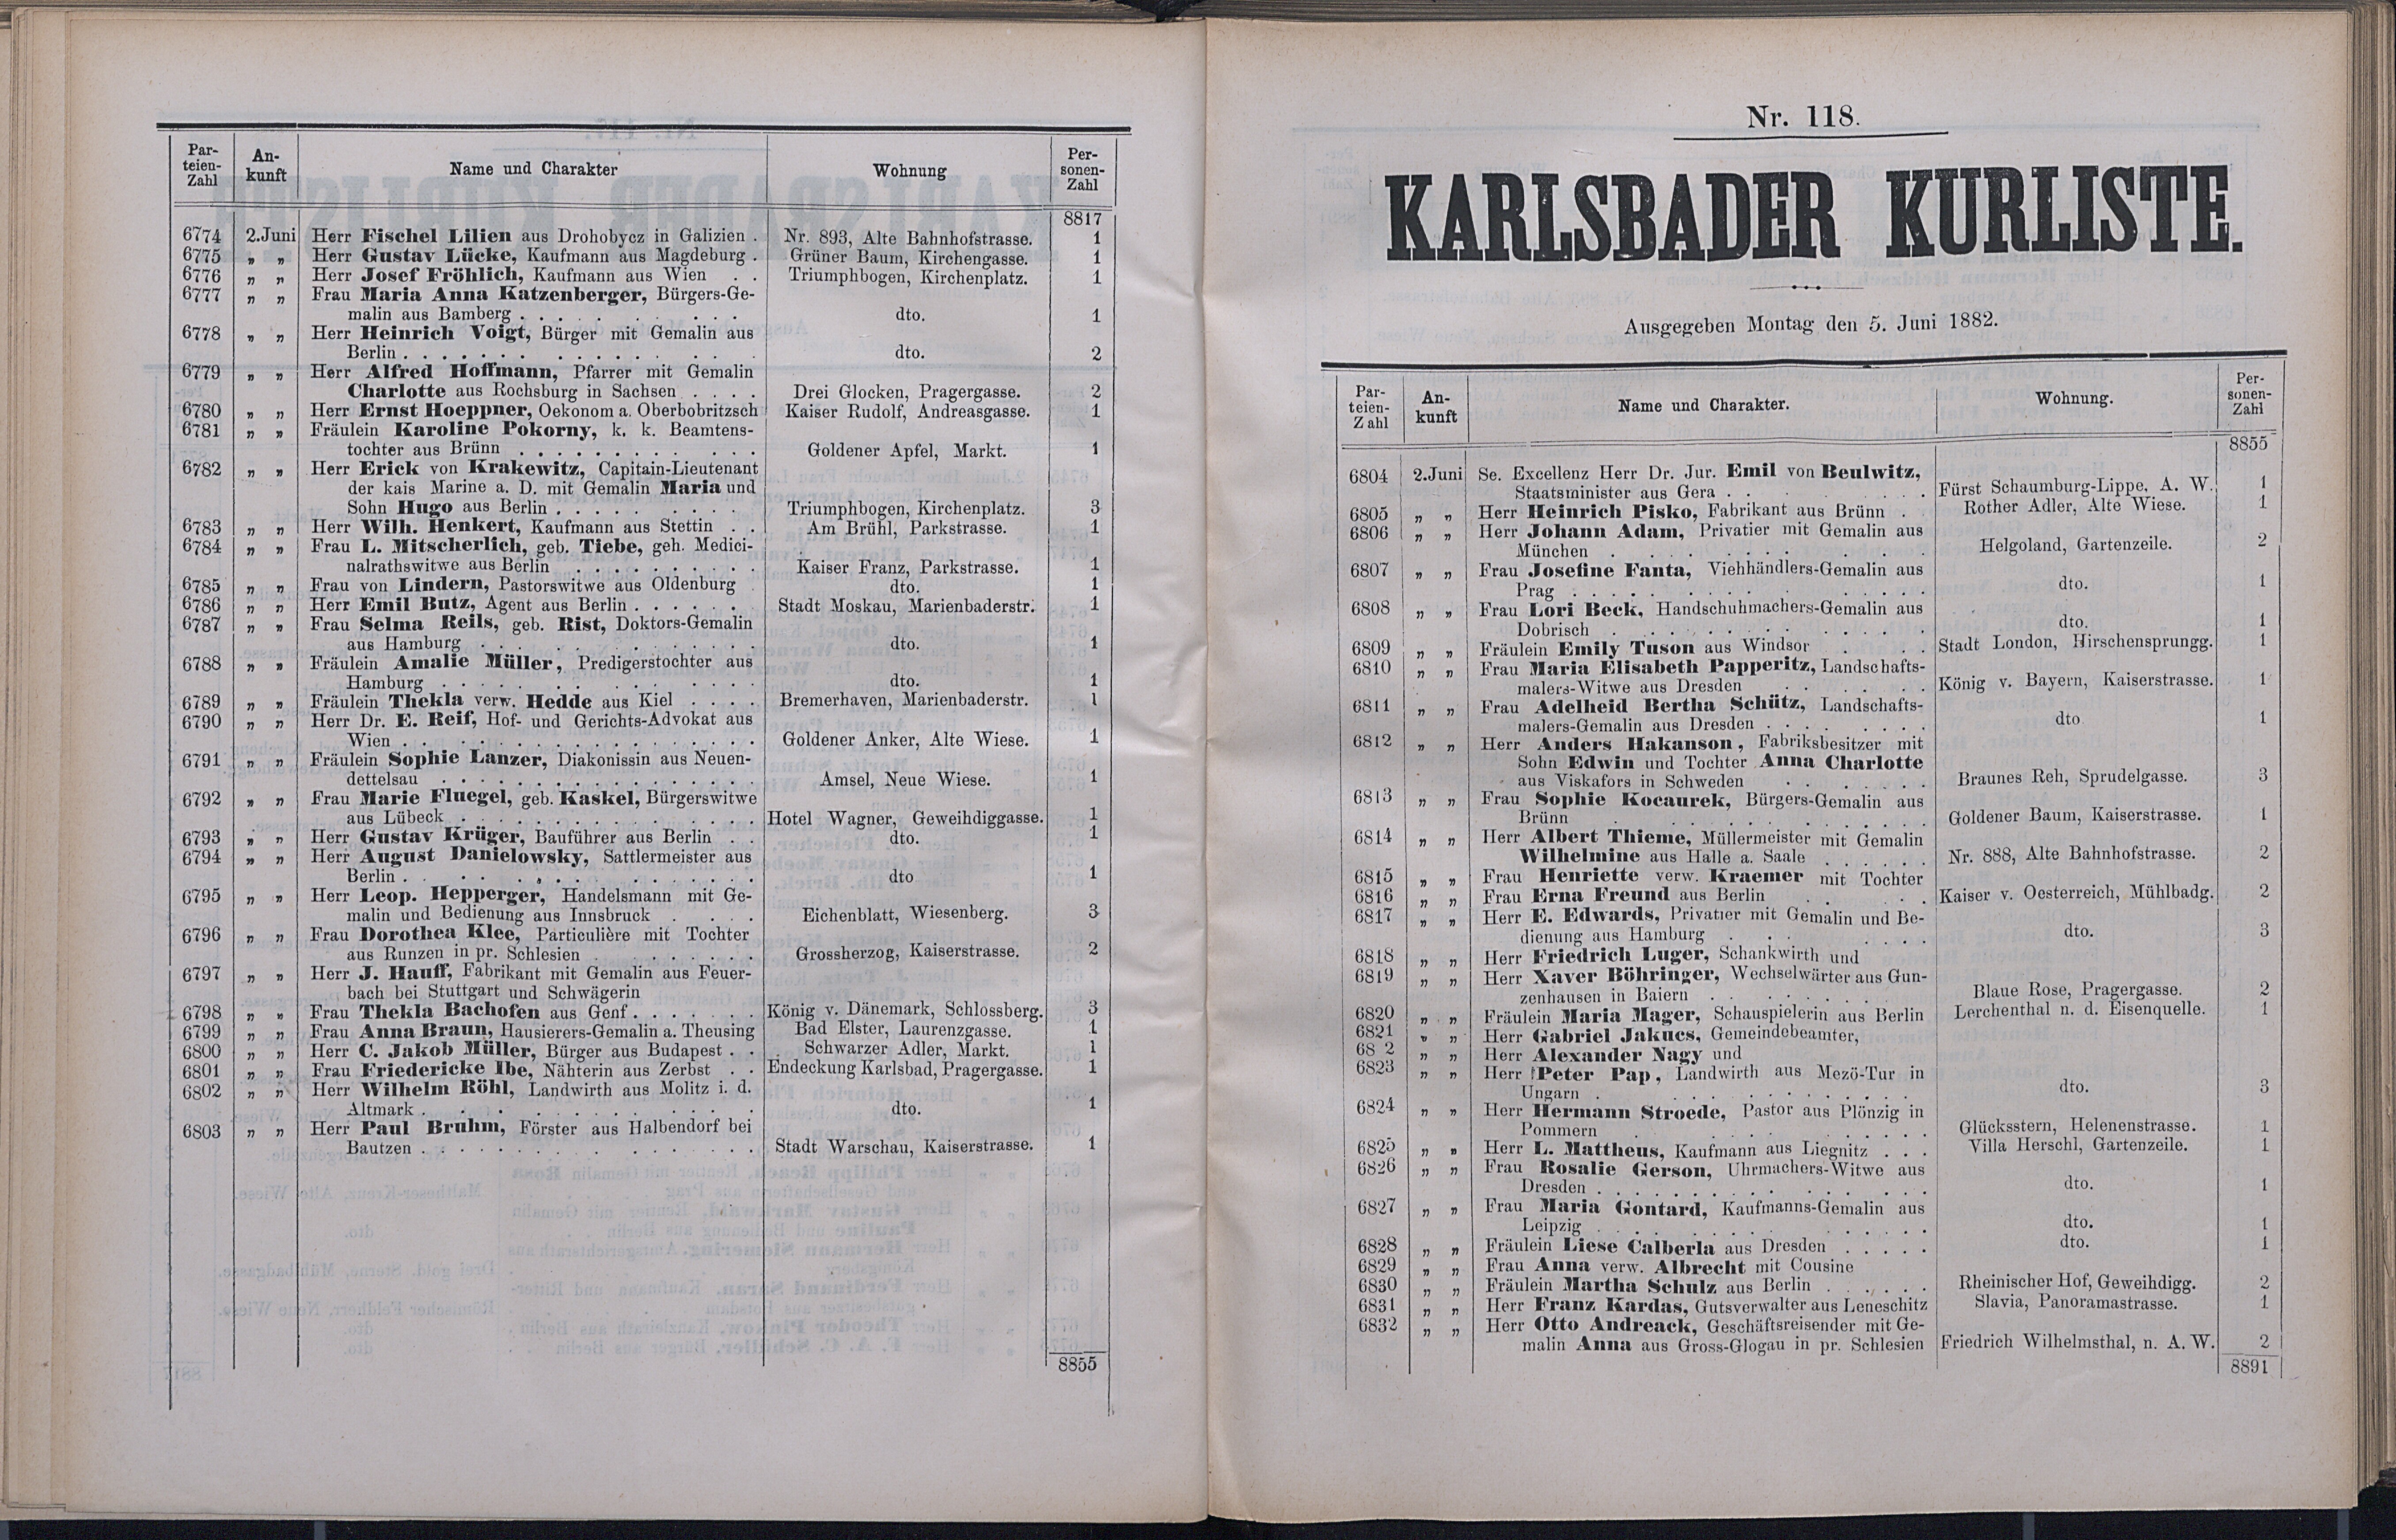 165. soap-kv_knihovna_karlsbader-kurliste-1882_1660